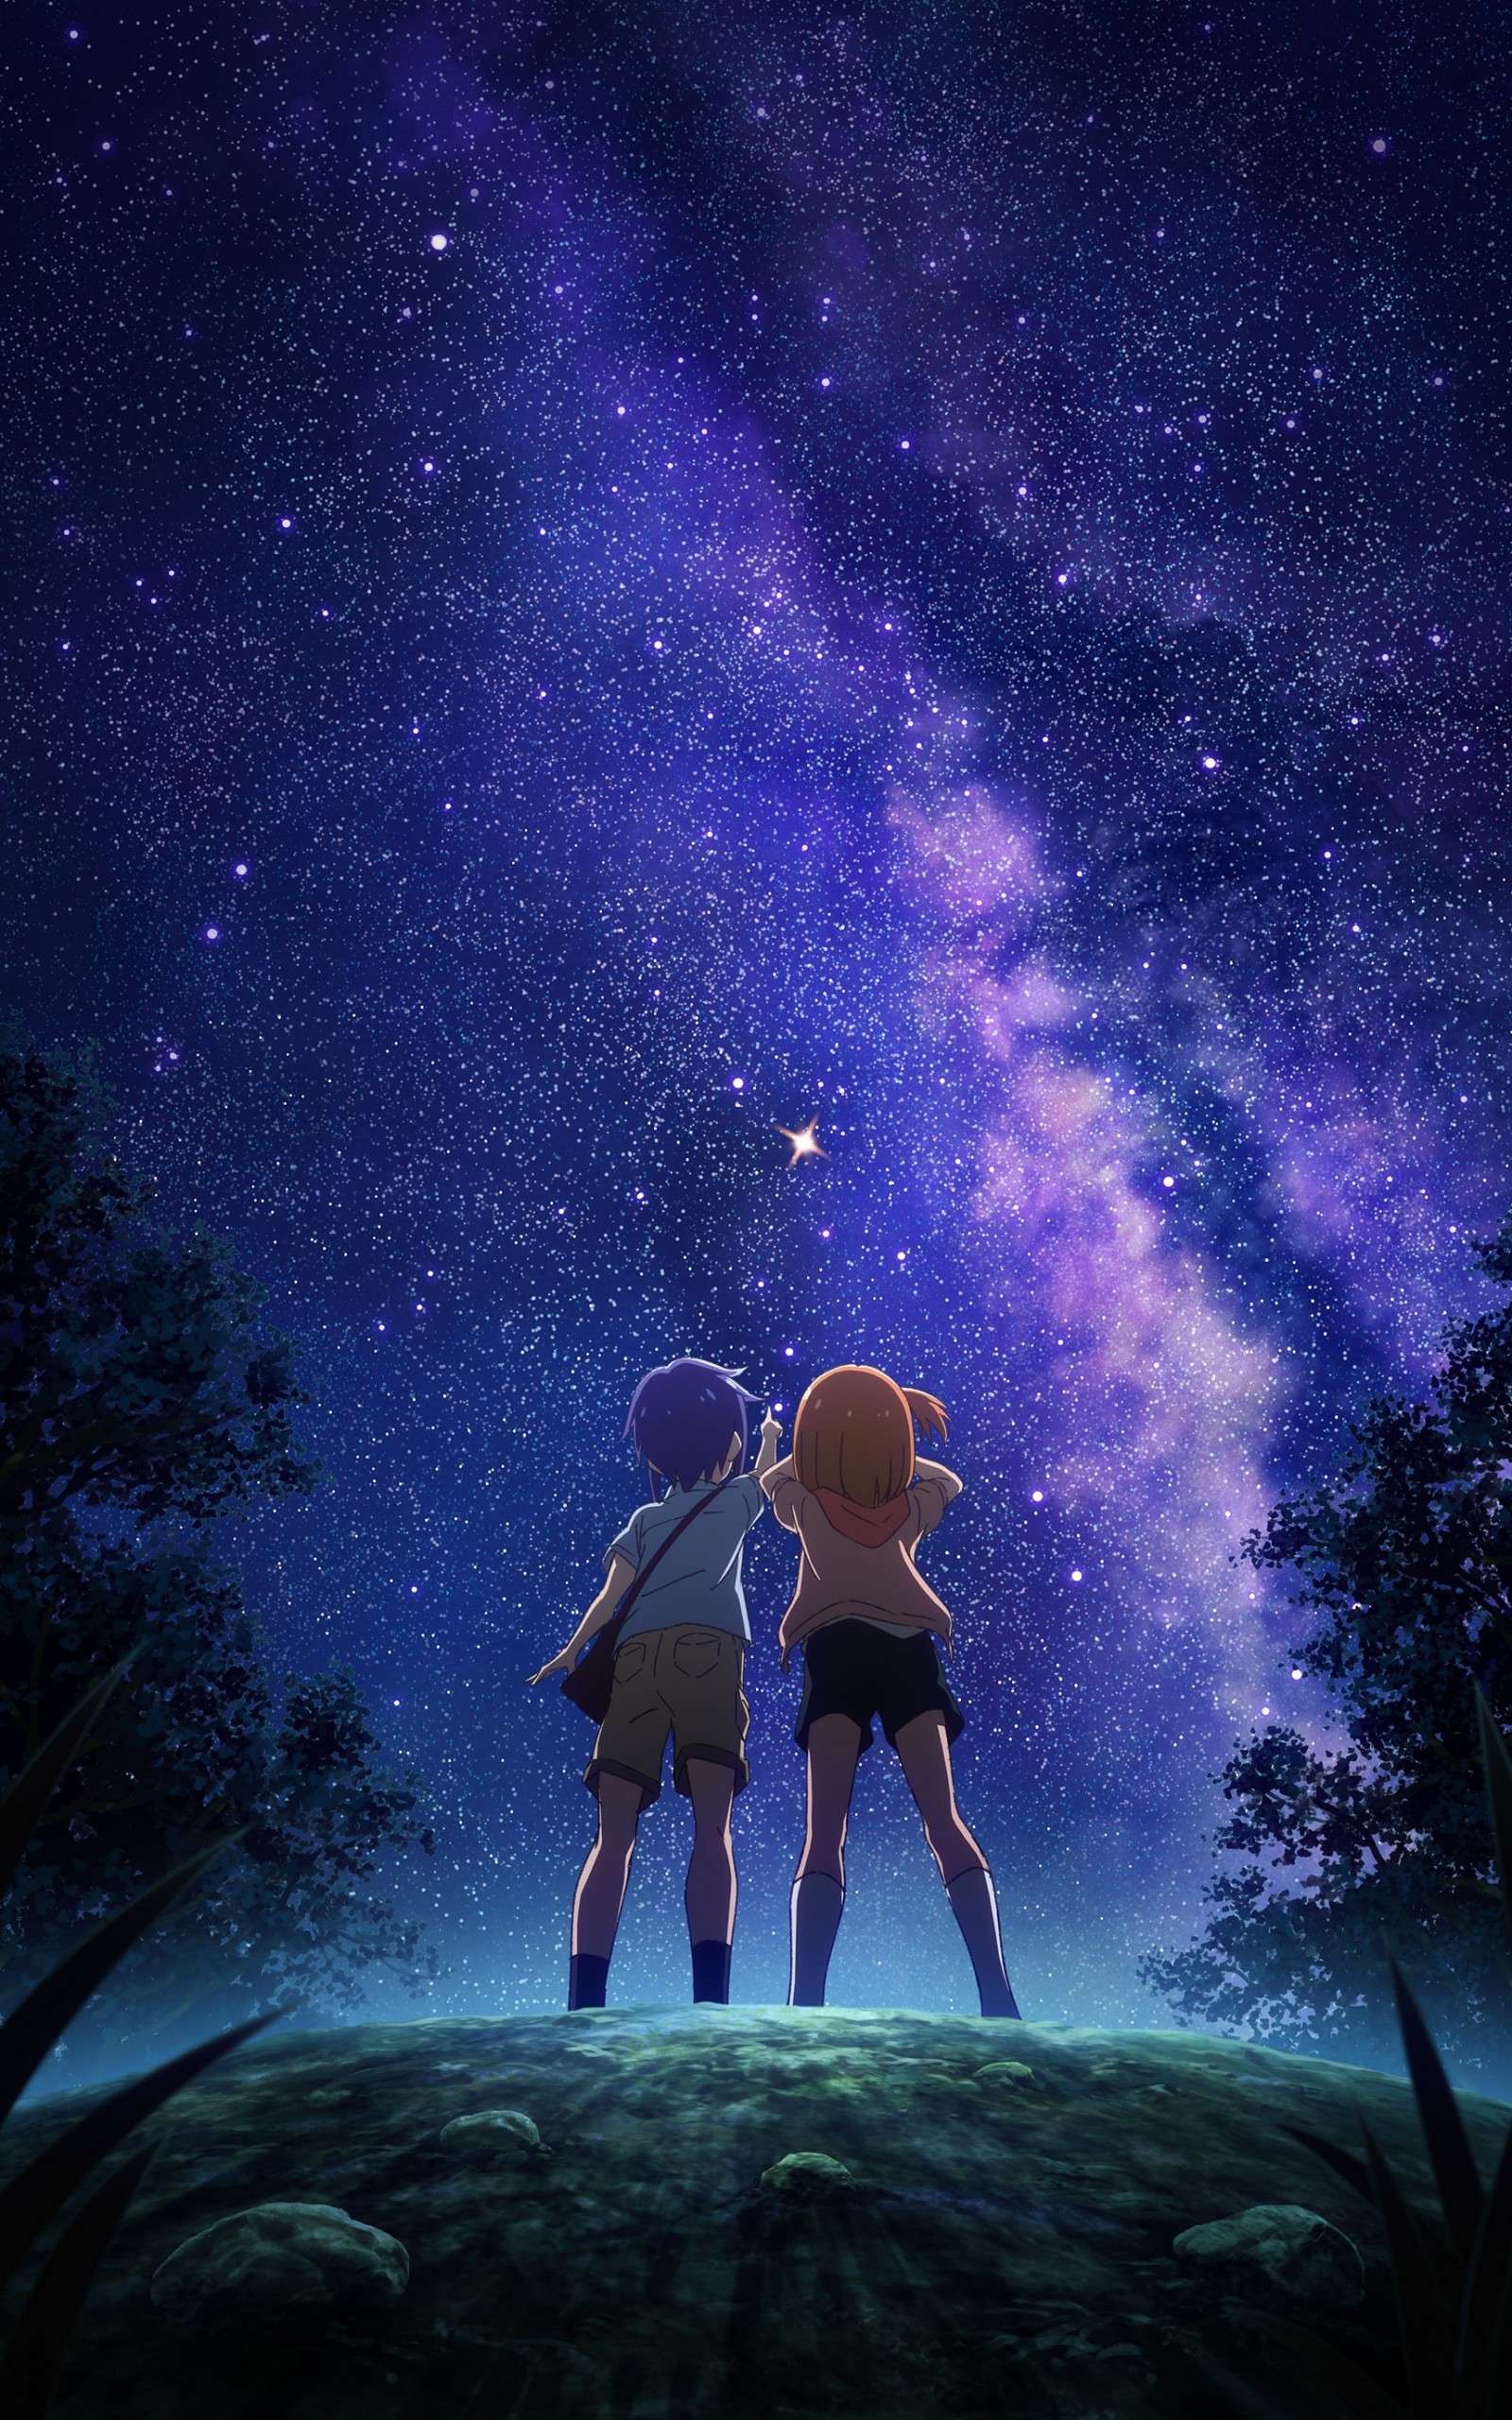 Anime Night Sky Manga Series HD Background Wallpaper 106130 - Baltana